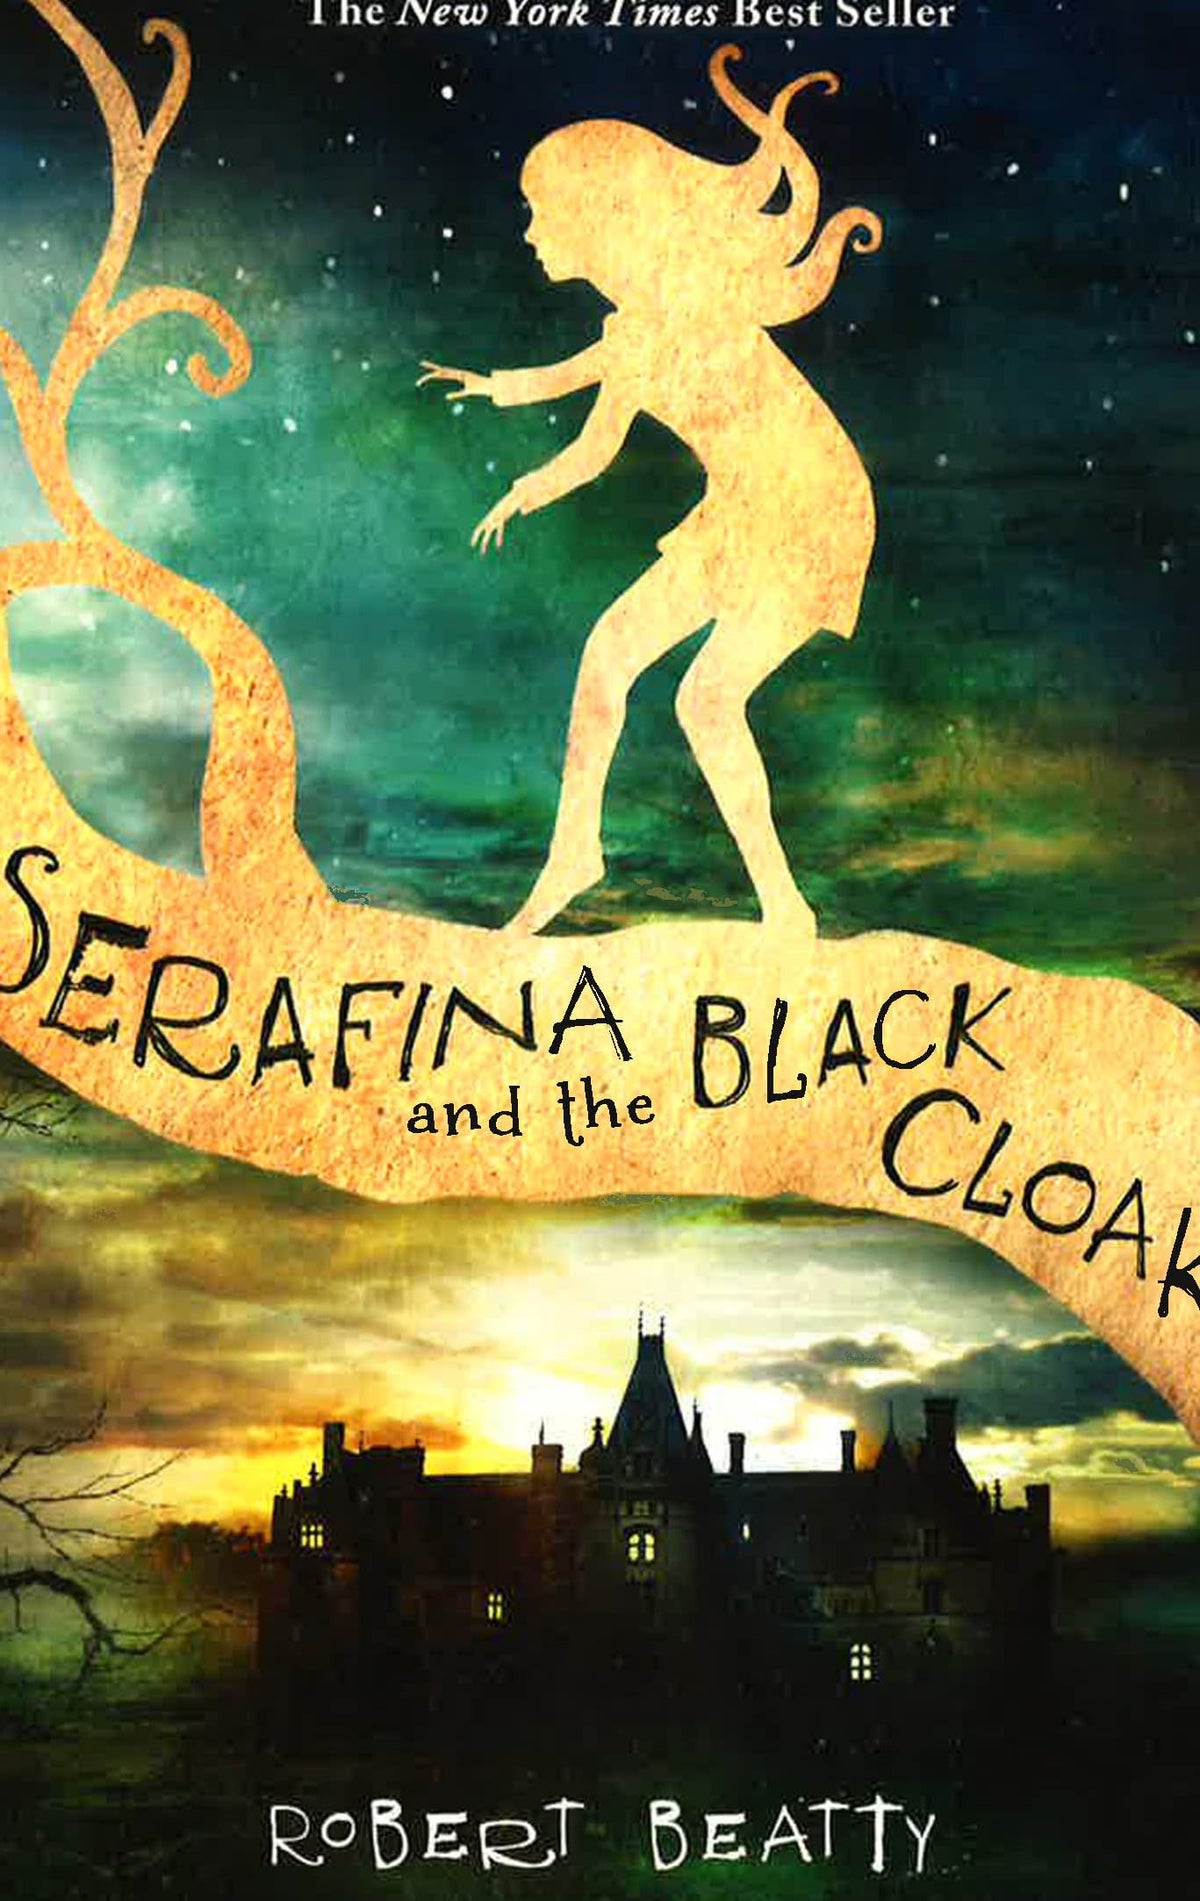 serafina and the black cloak 2